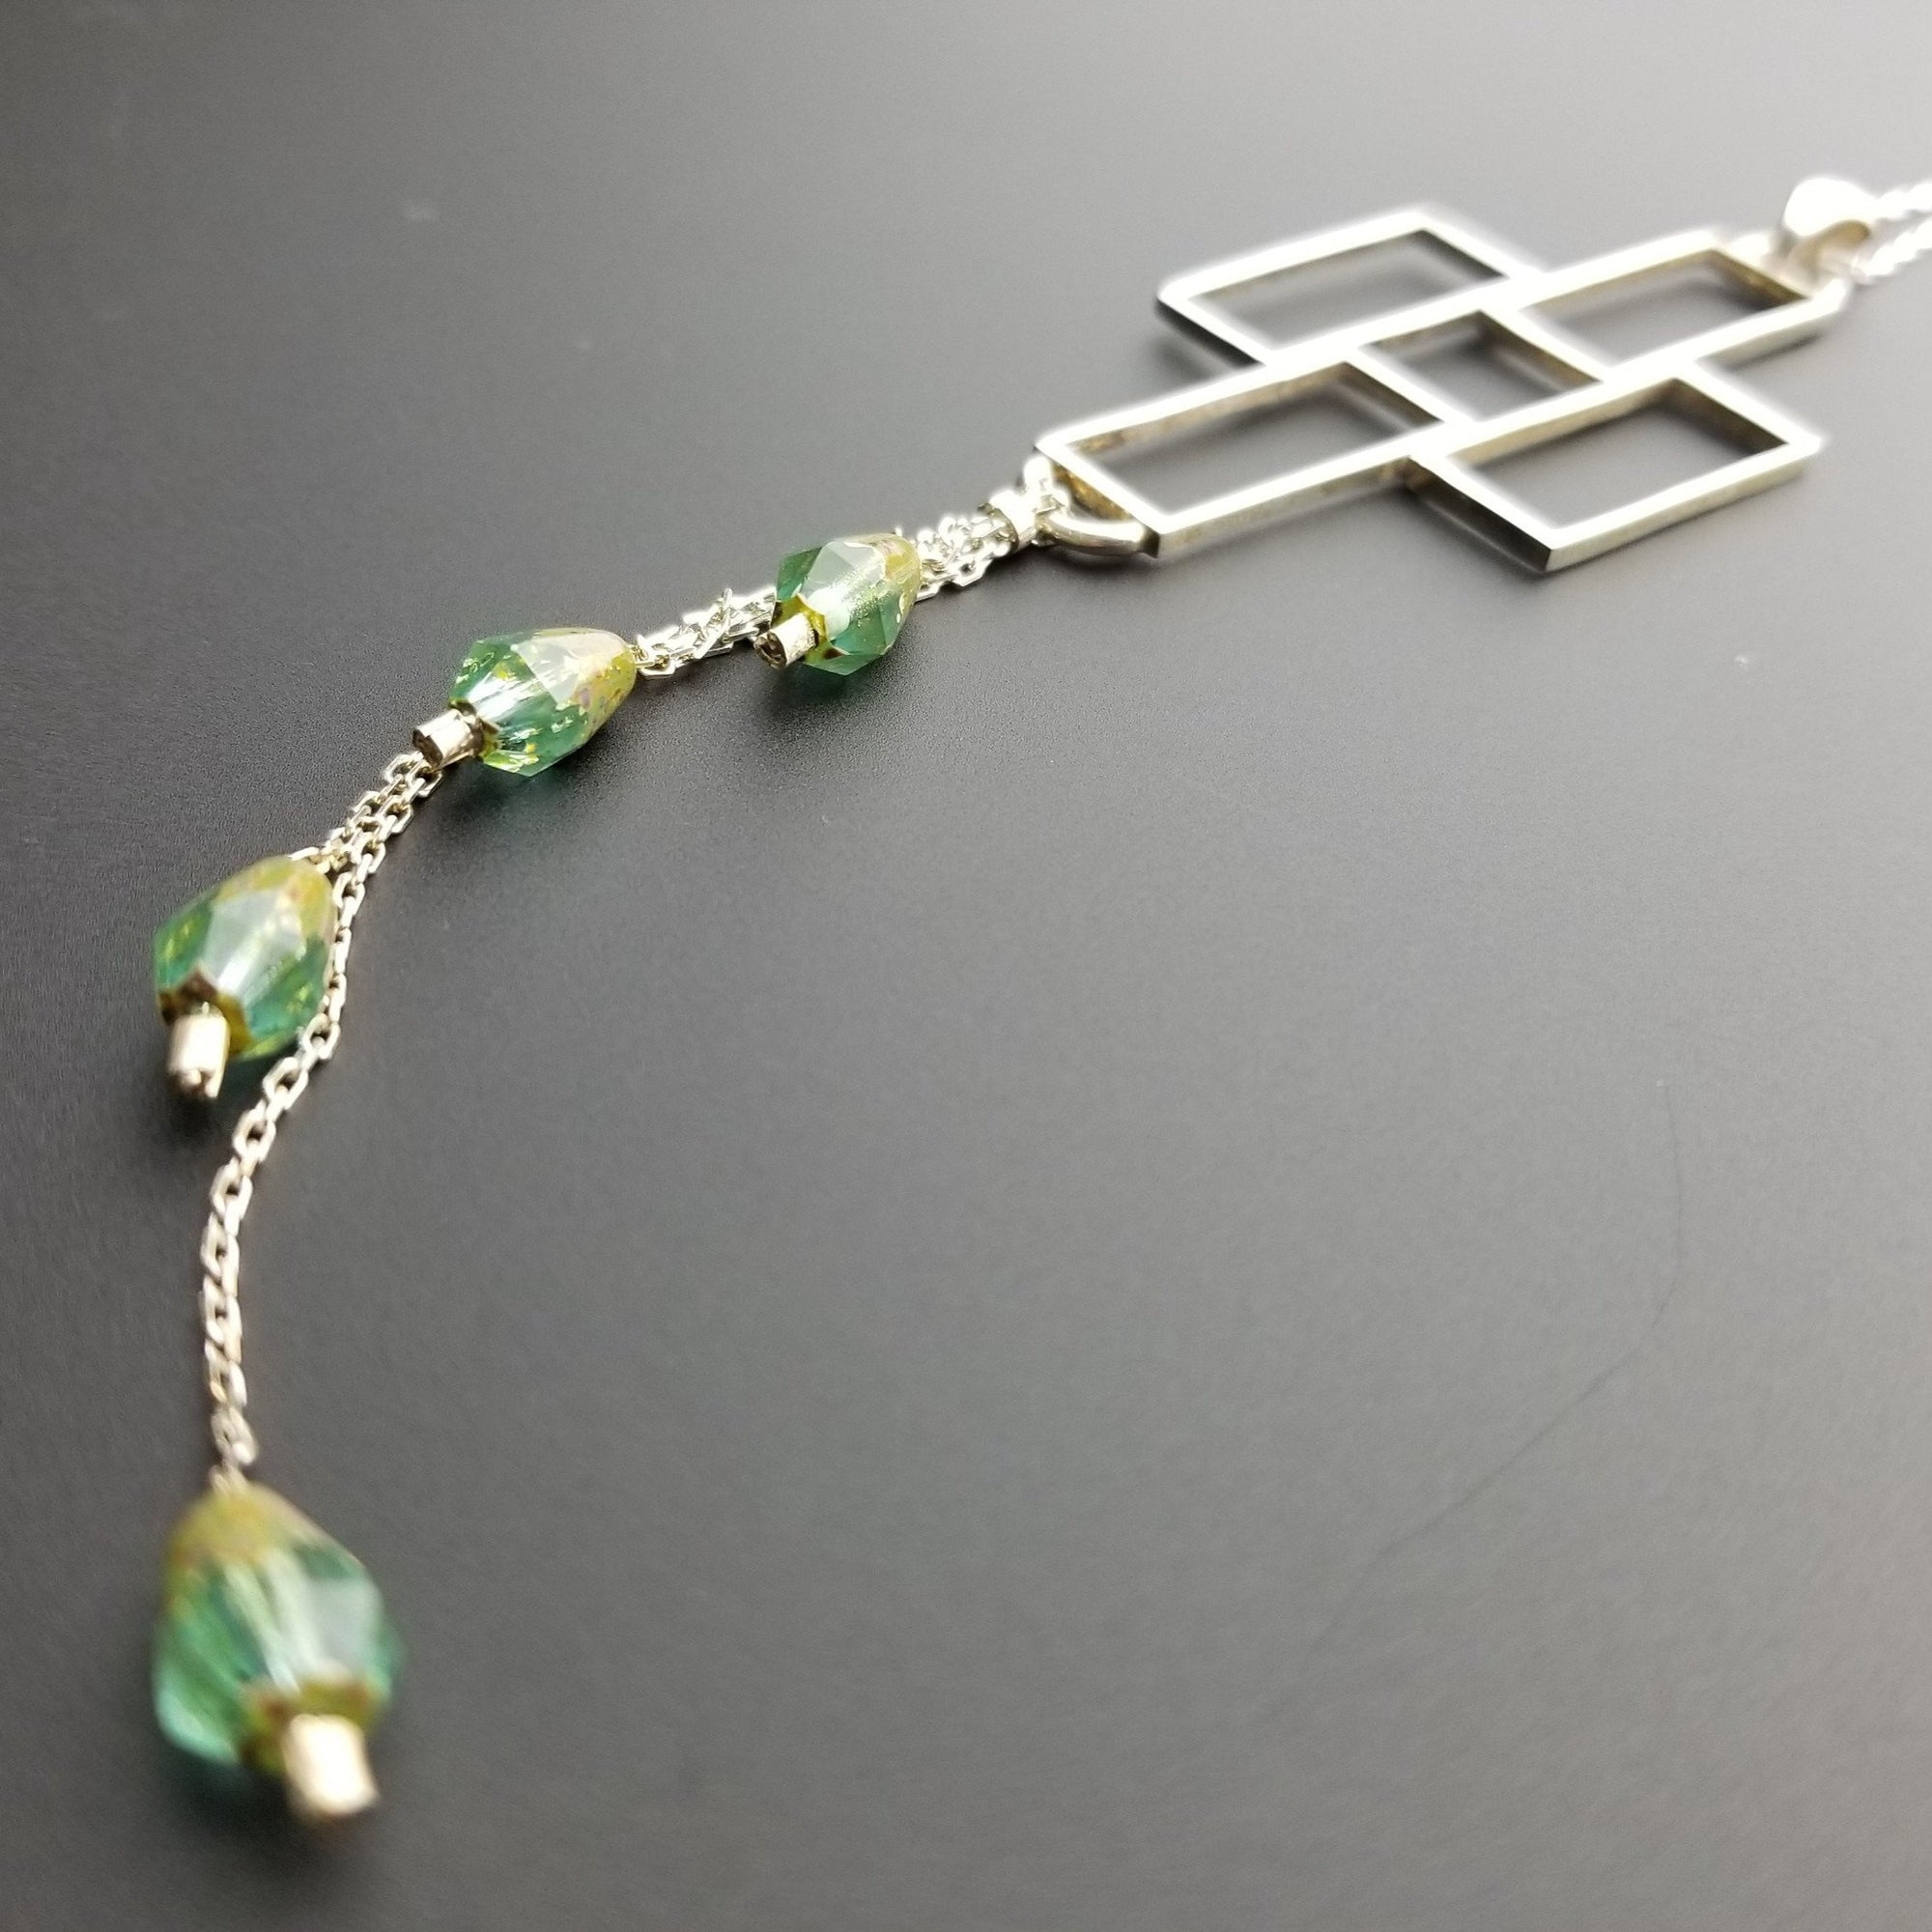 Emerald bead silver cross pendant